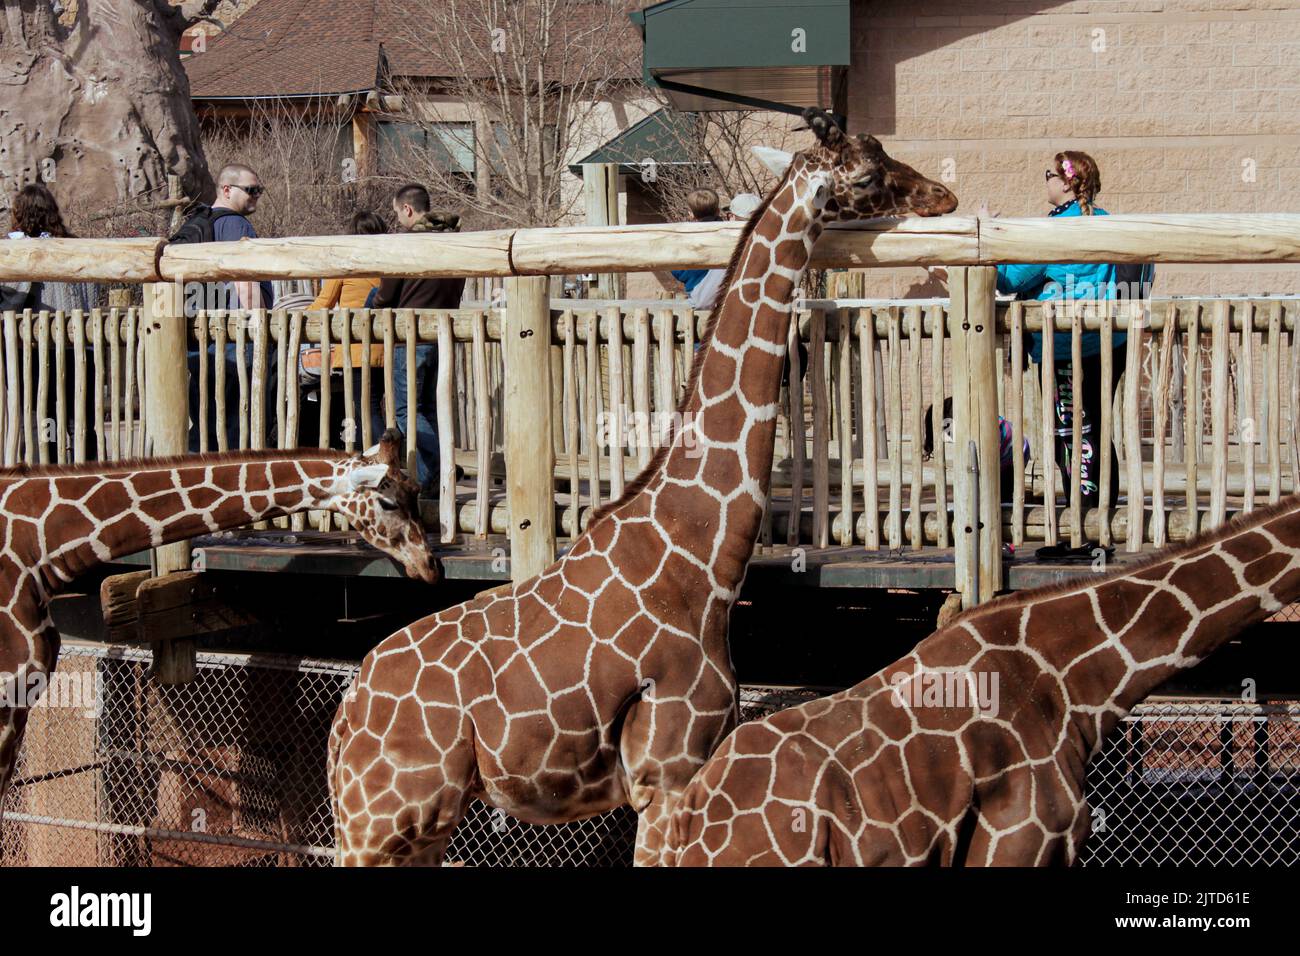 Giraffe at Cheyenne Mountain Zoo next to fence Stock Photo